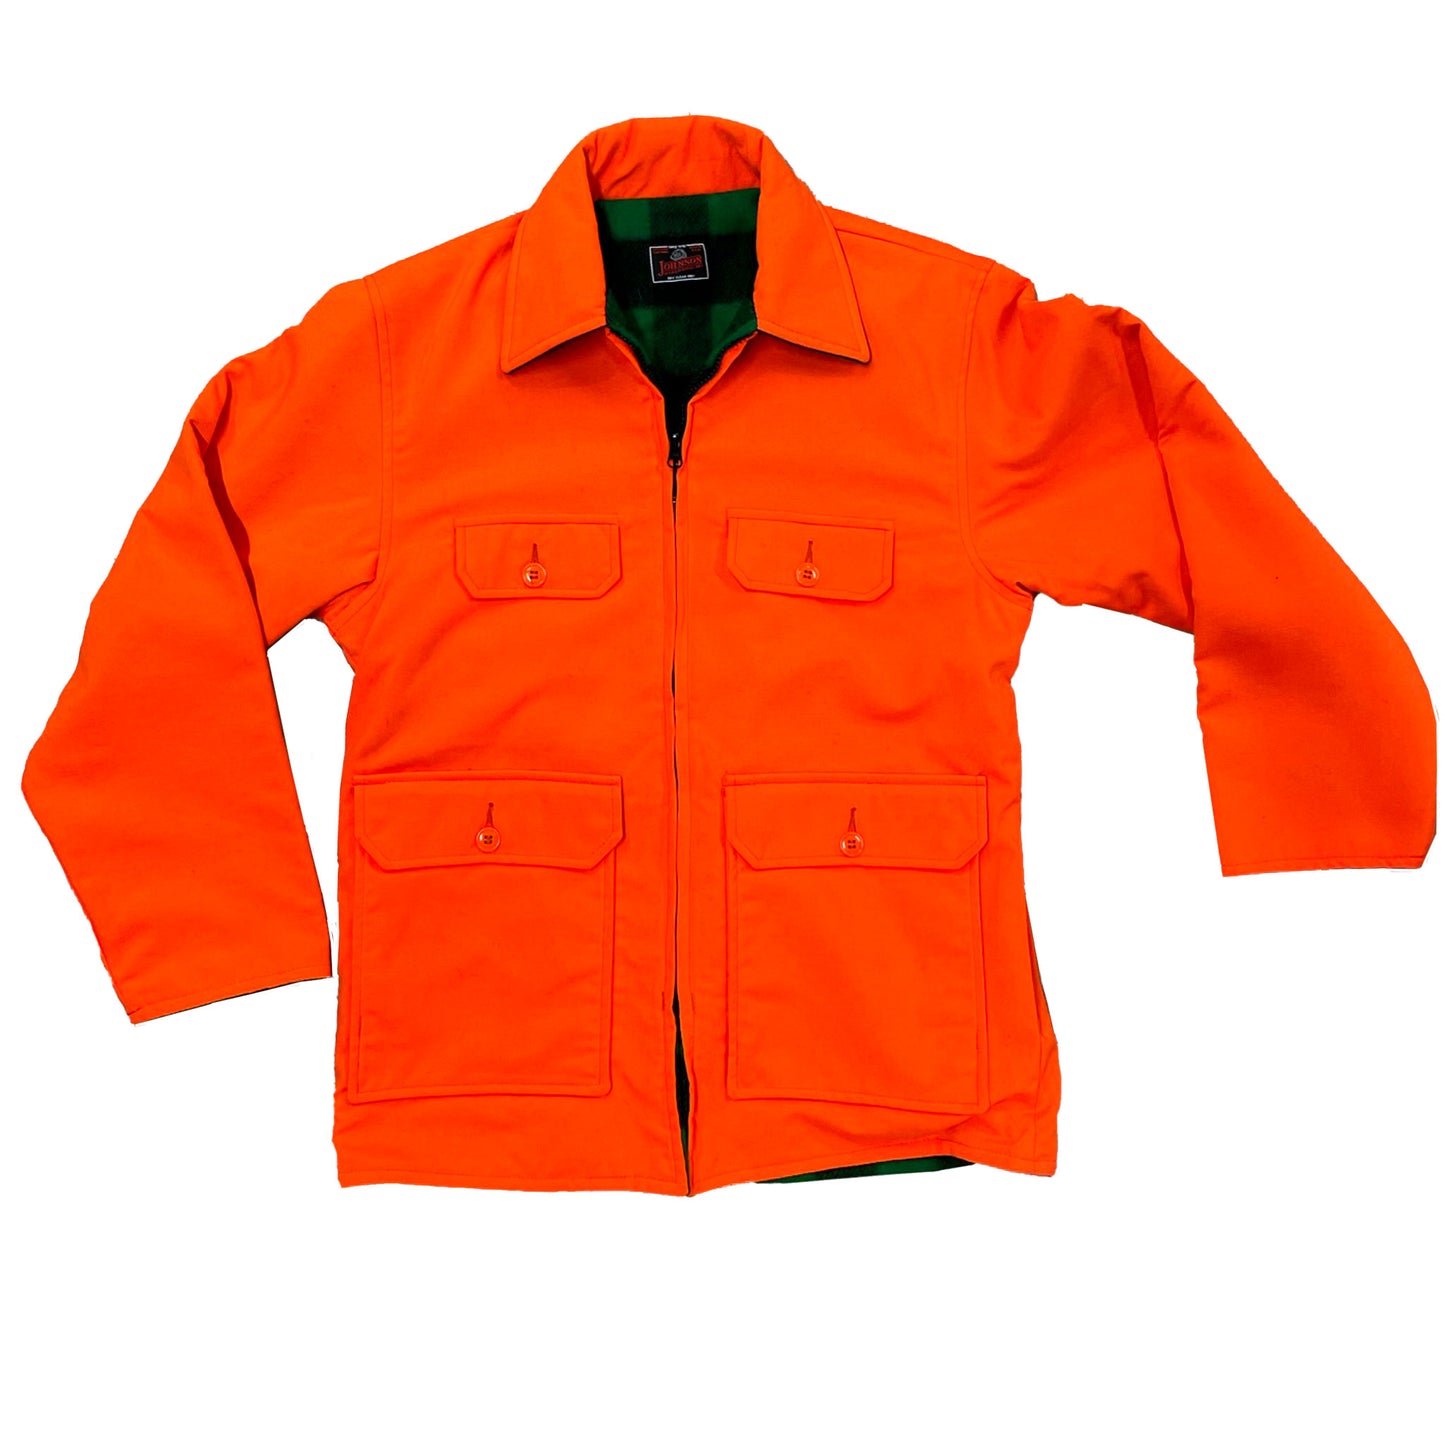 Johnson Woolen Mills blaze orange reversible jacket with green and black check interior